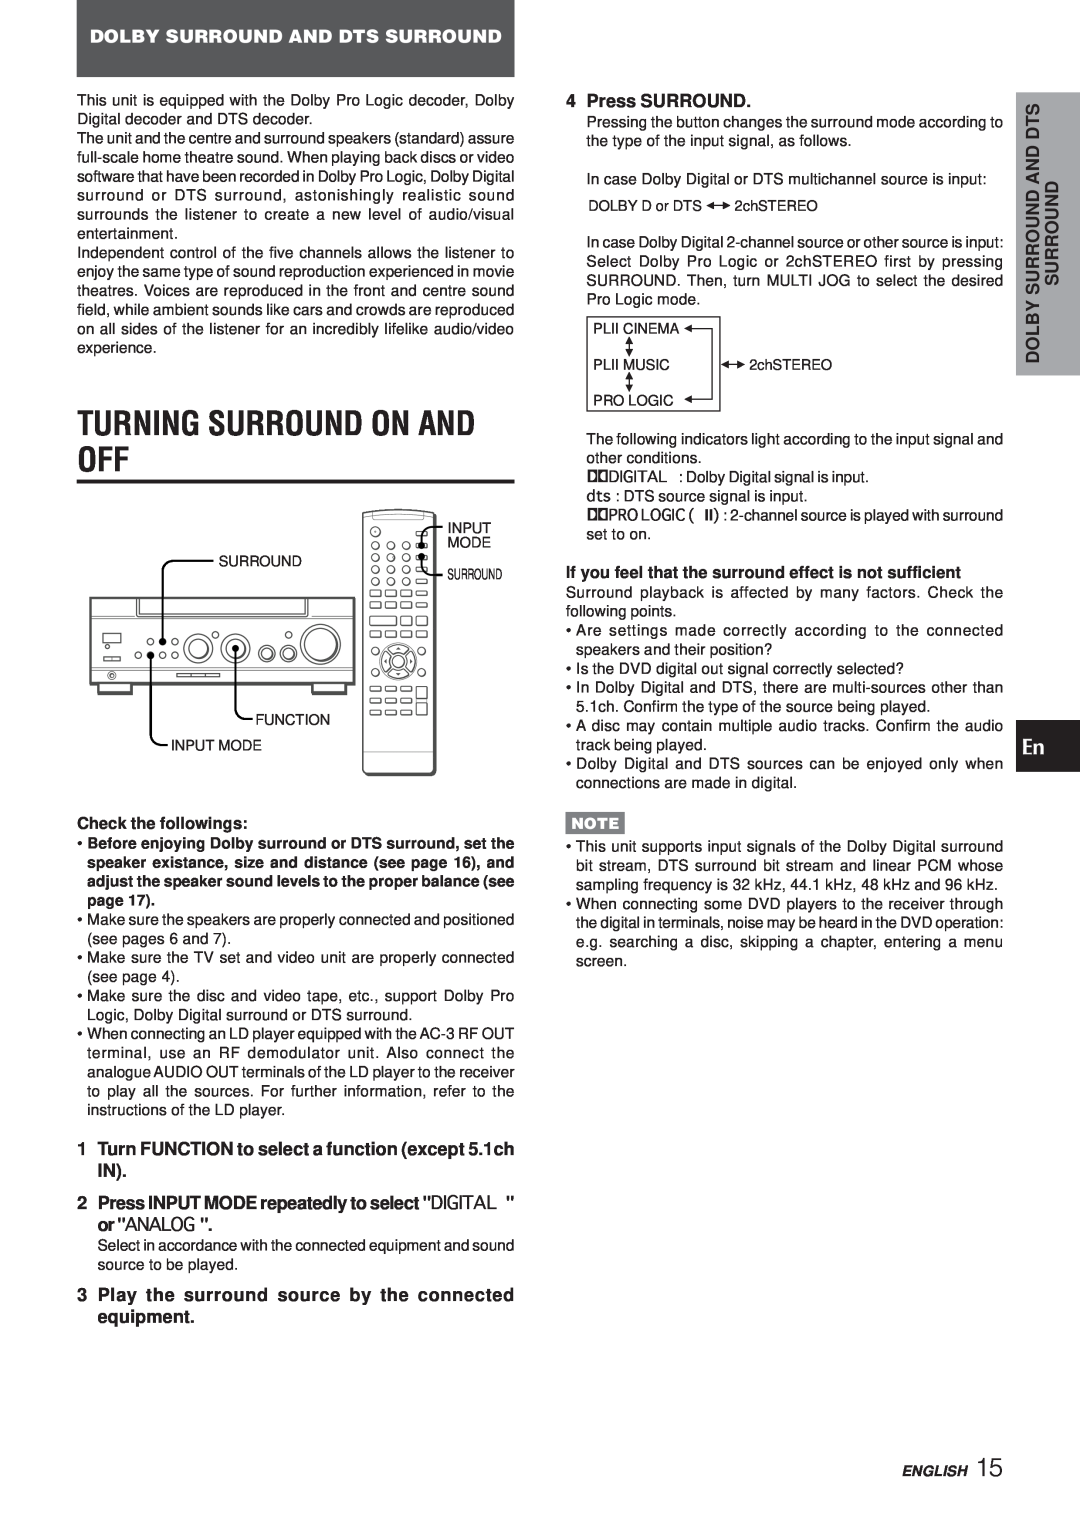 Aiwa AV-NW50 manual Turning Surround On And Off, Dolby Surround And Dts Surround, Press SURROUND 